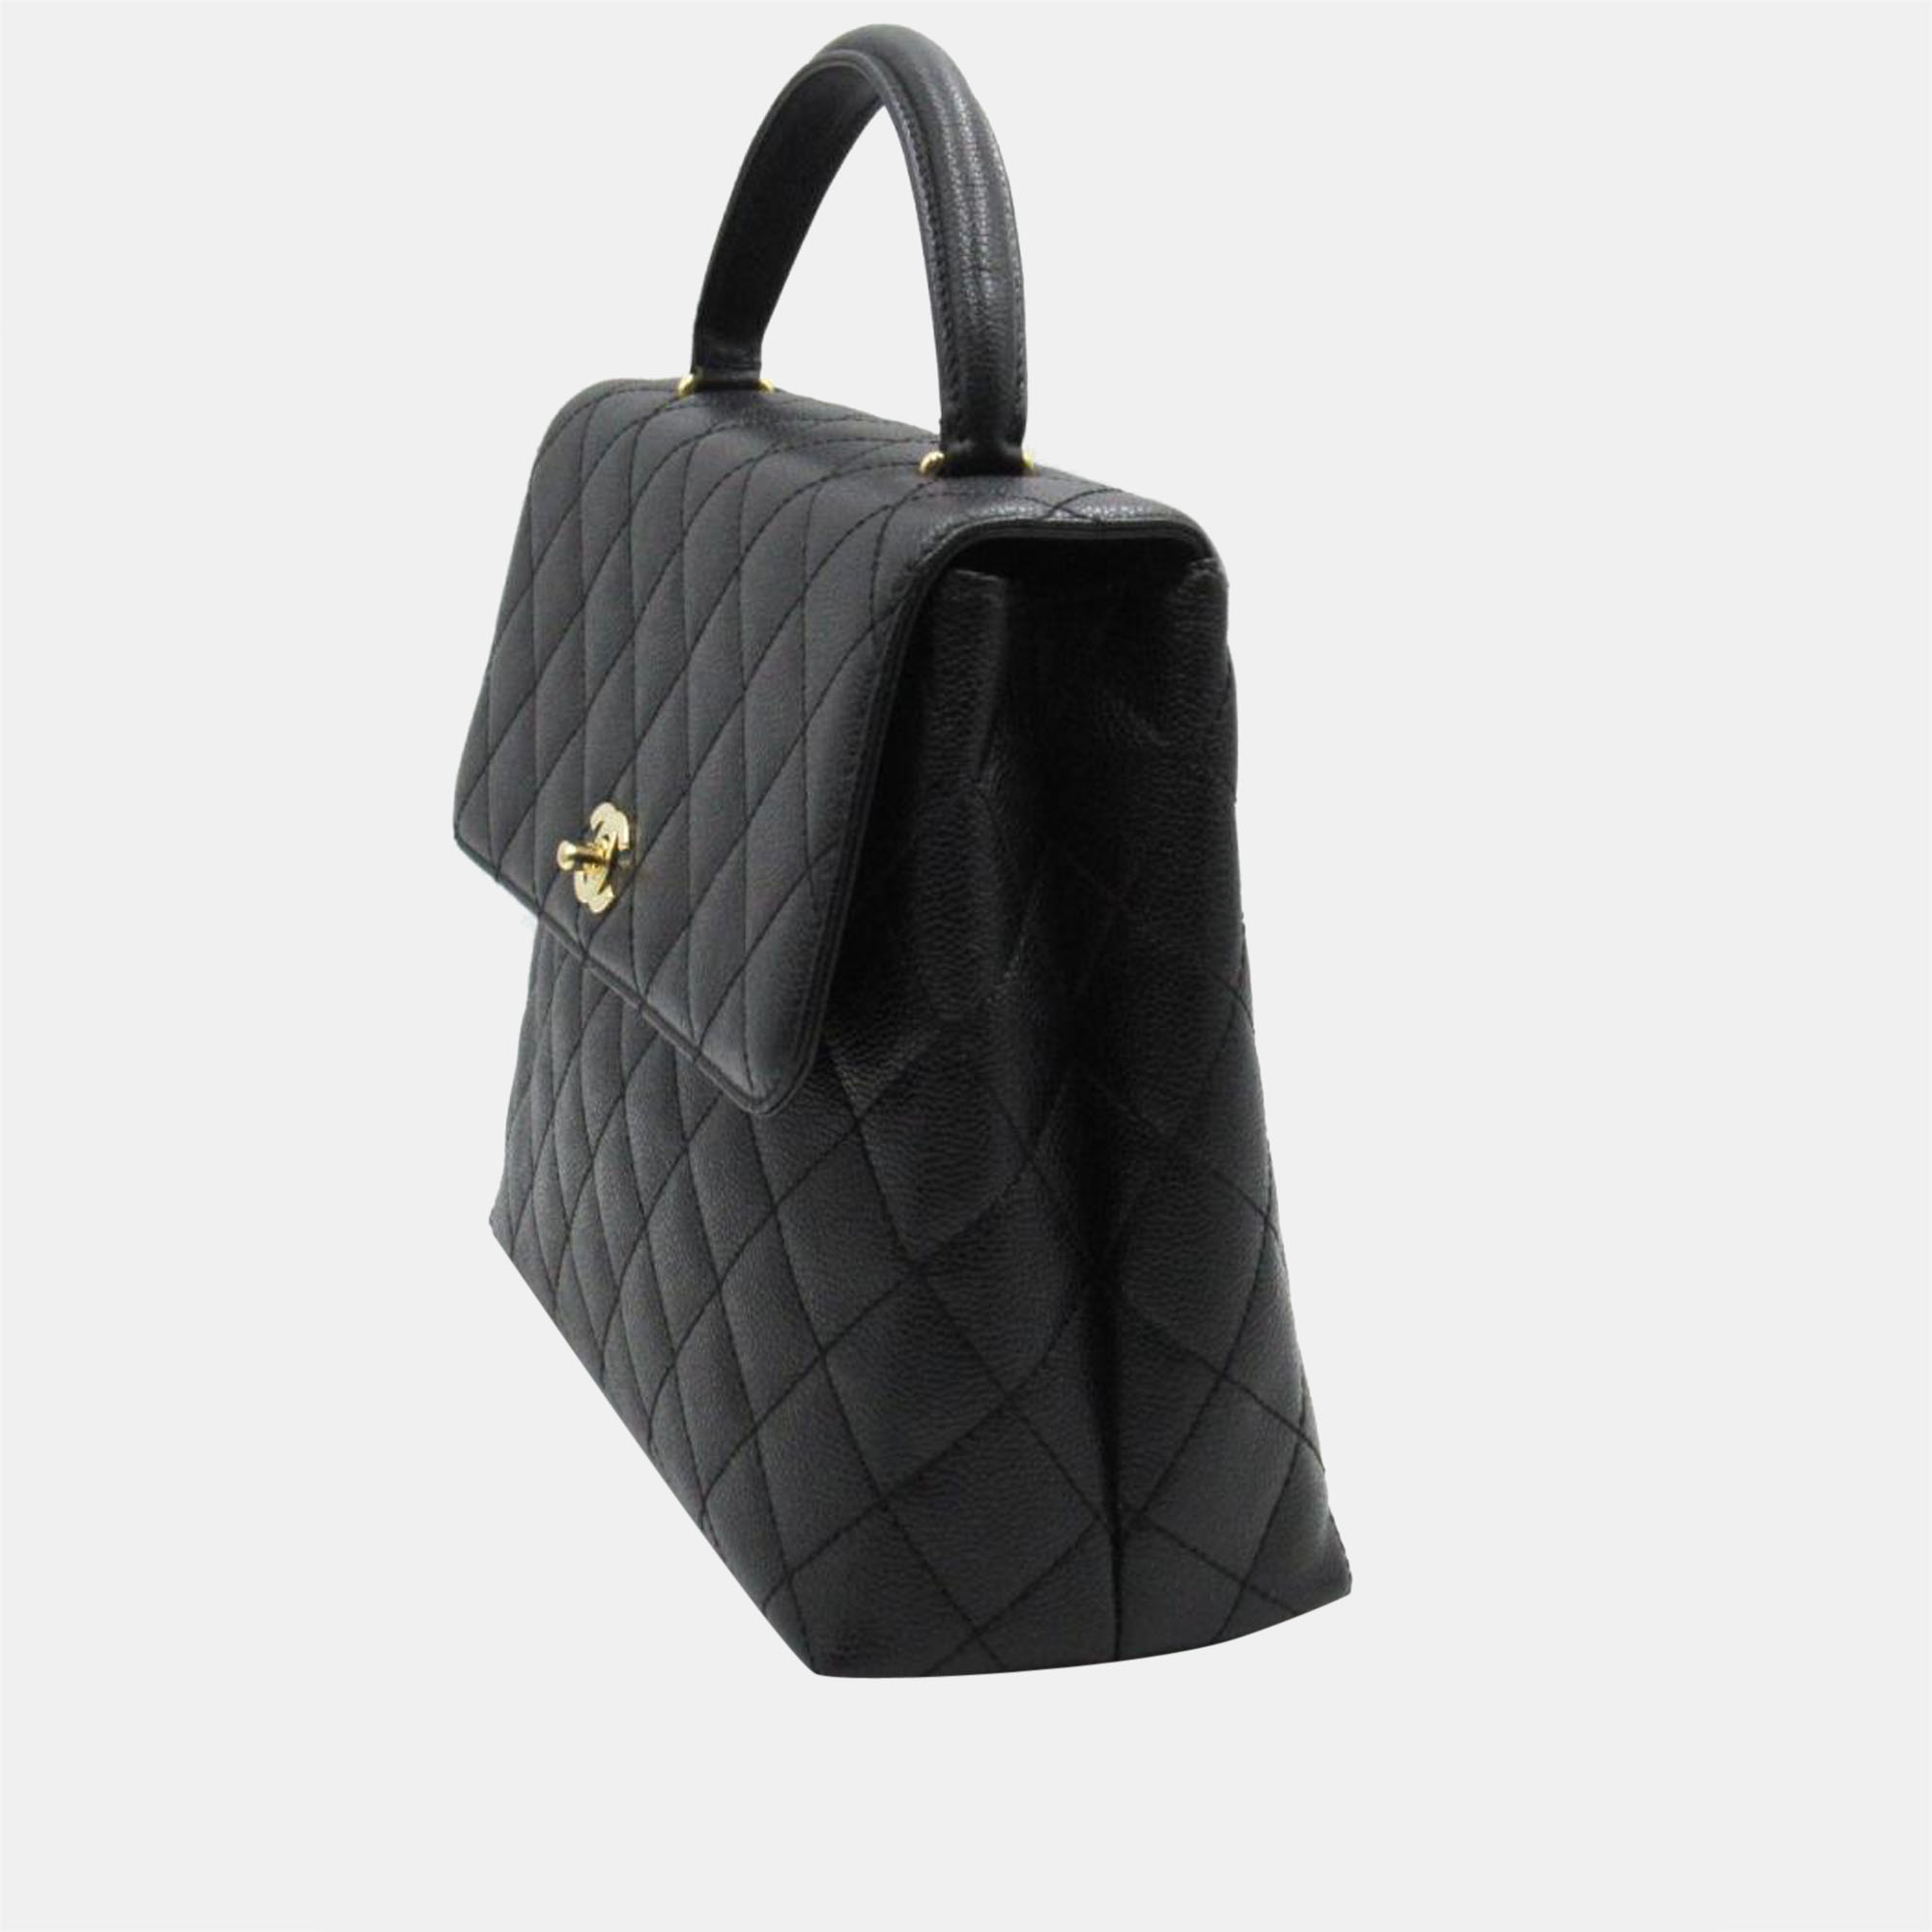 

Chanel Black Caviar Leather Kelly Handbag